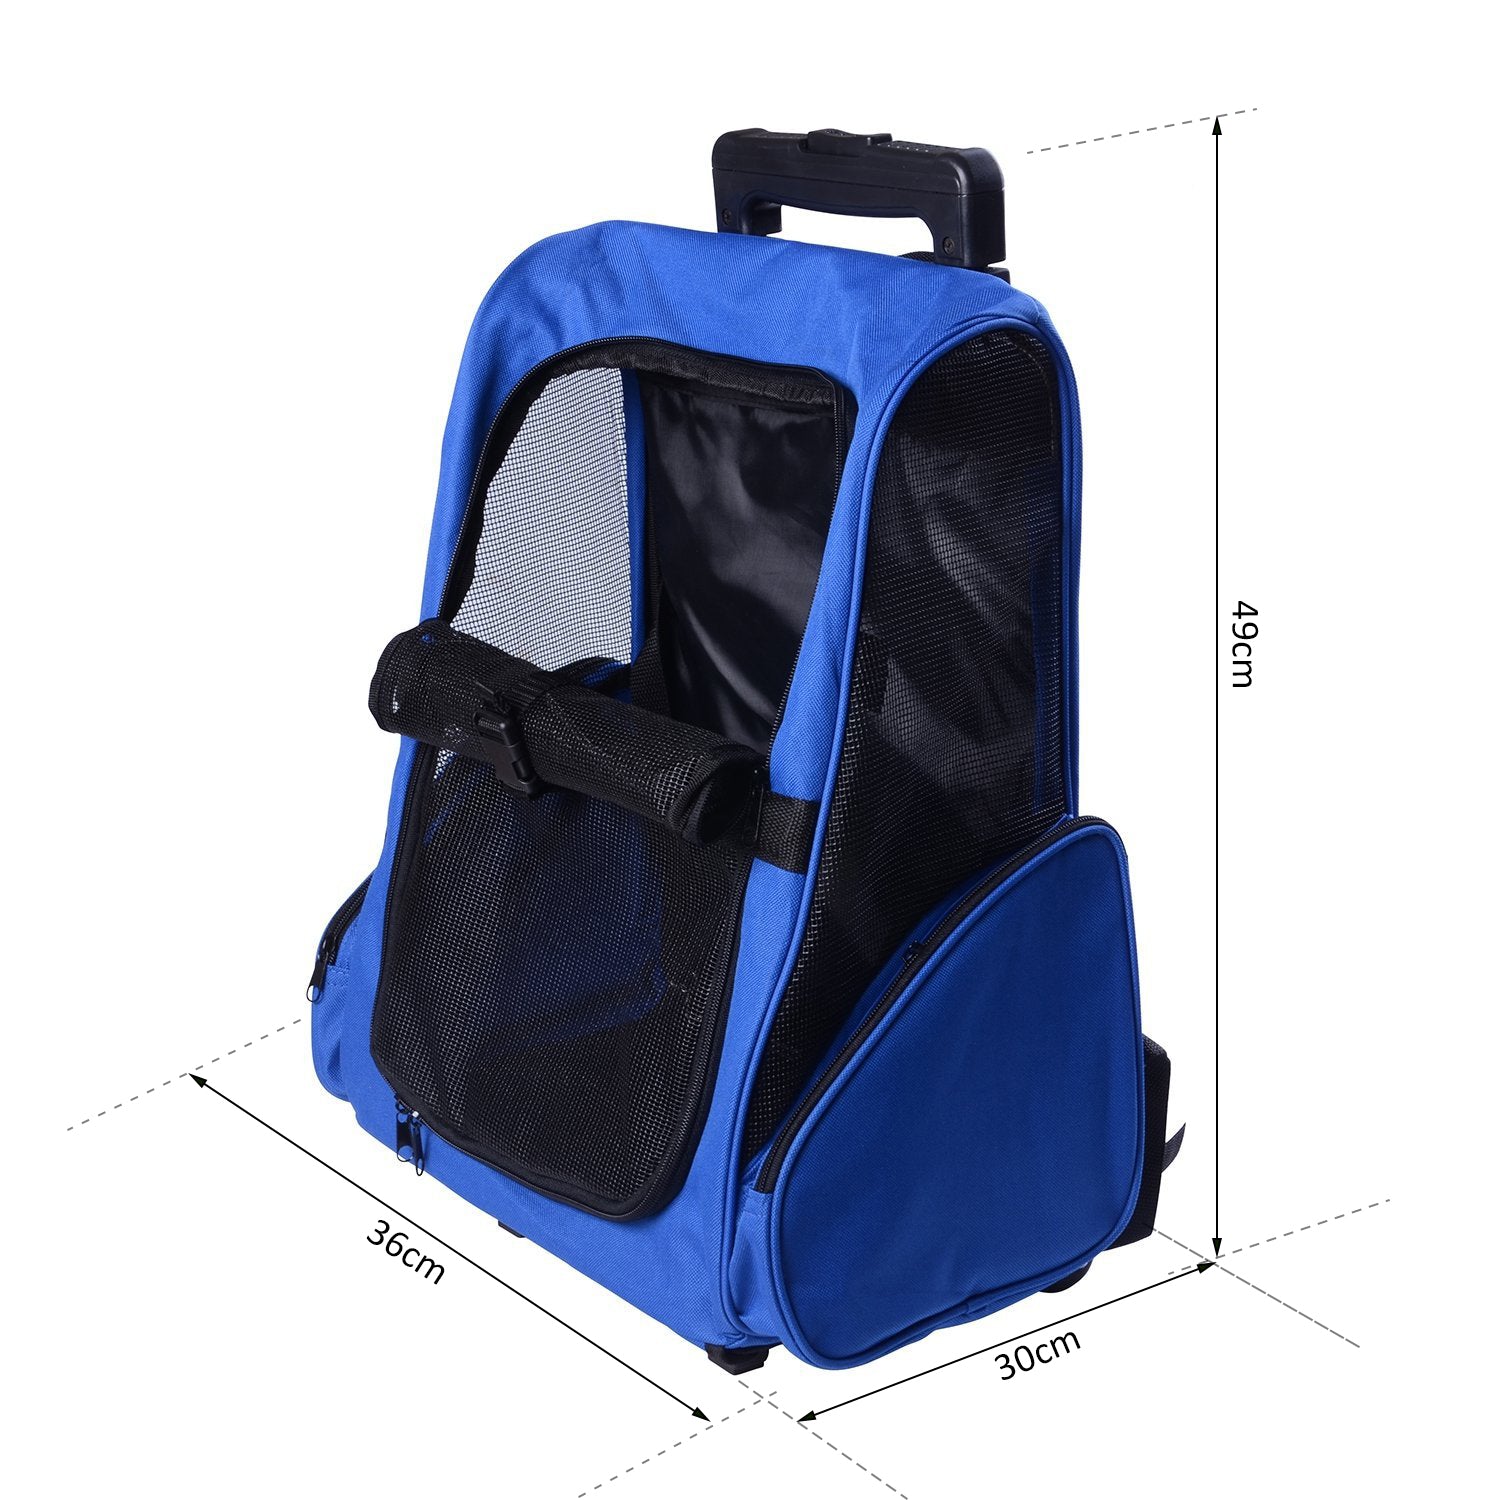 Pet Travel Stroller, Steel Wire Frame-Blue